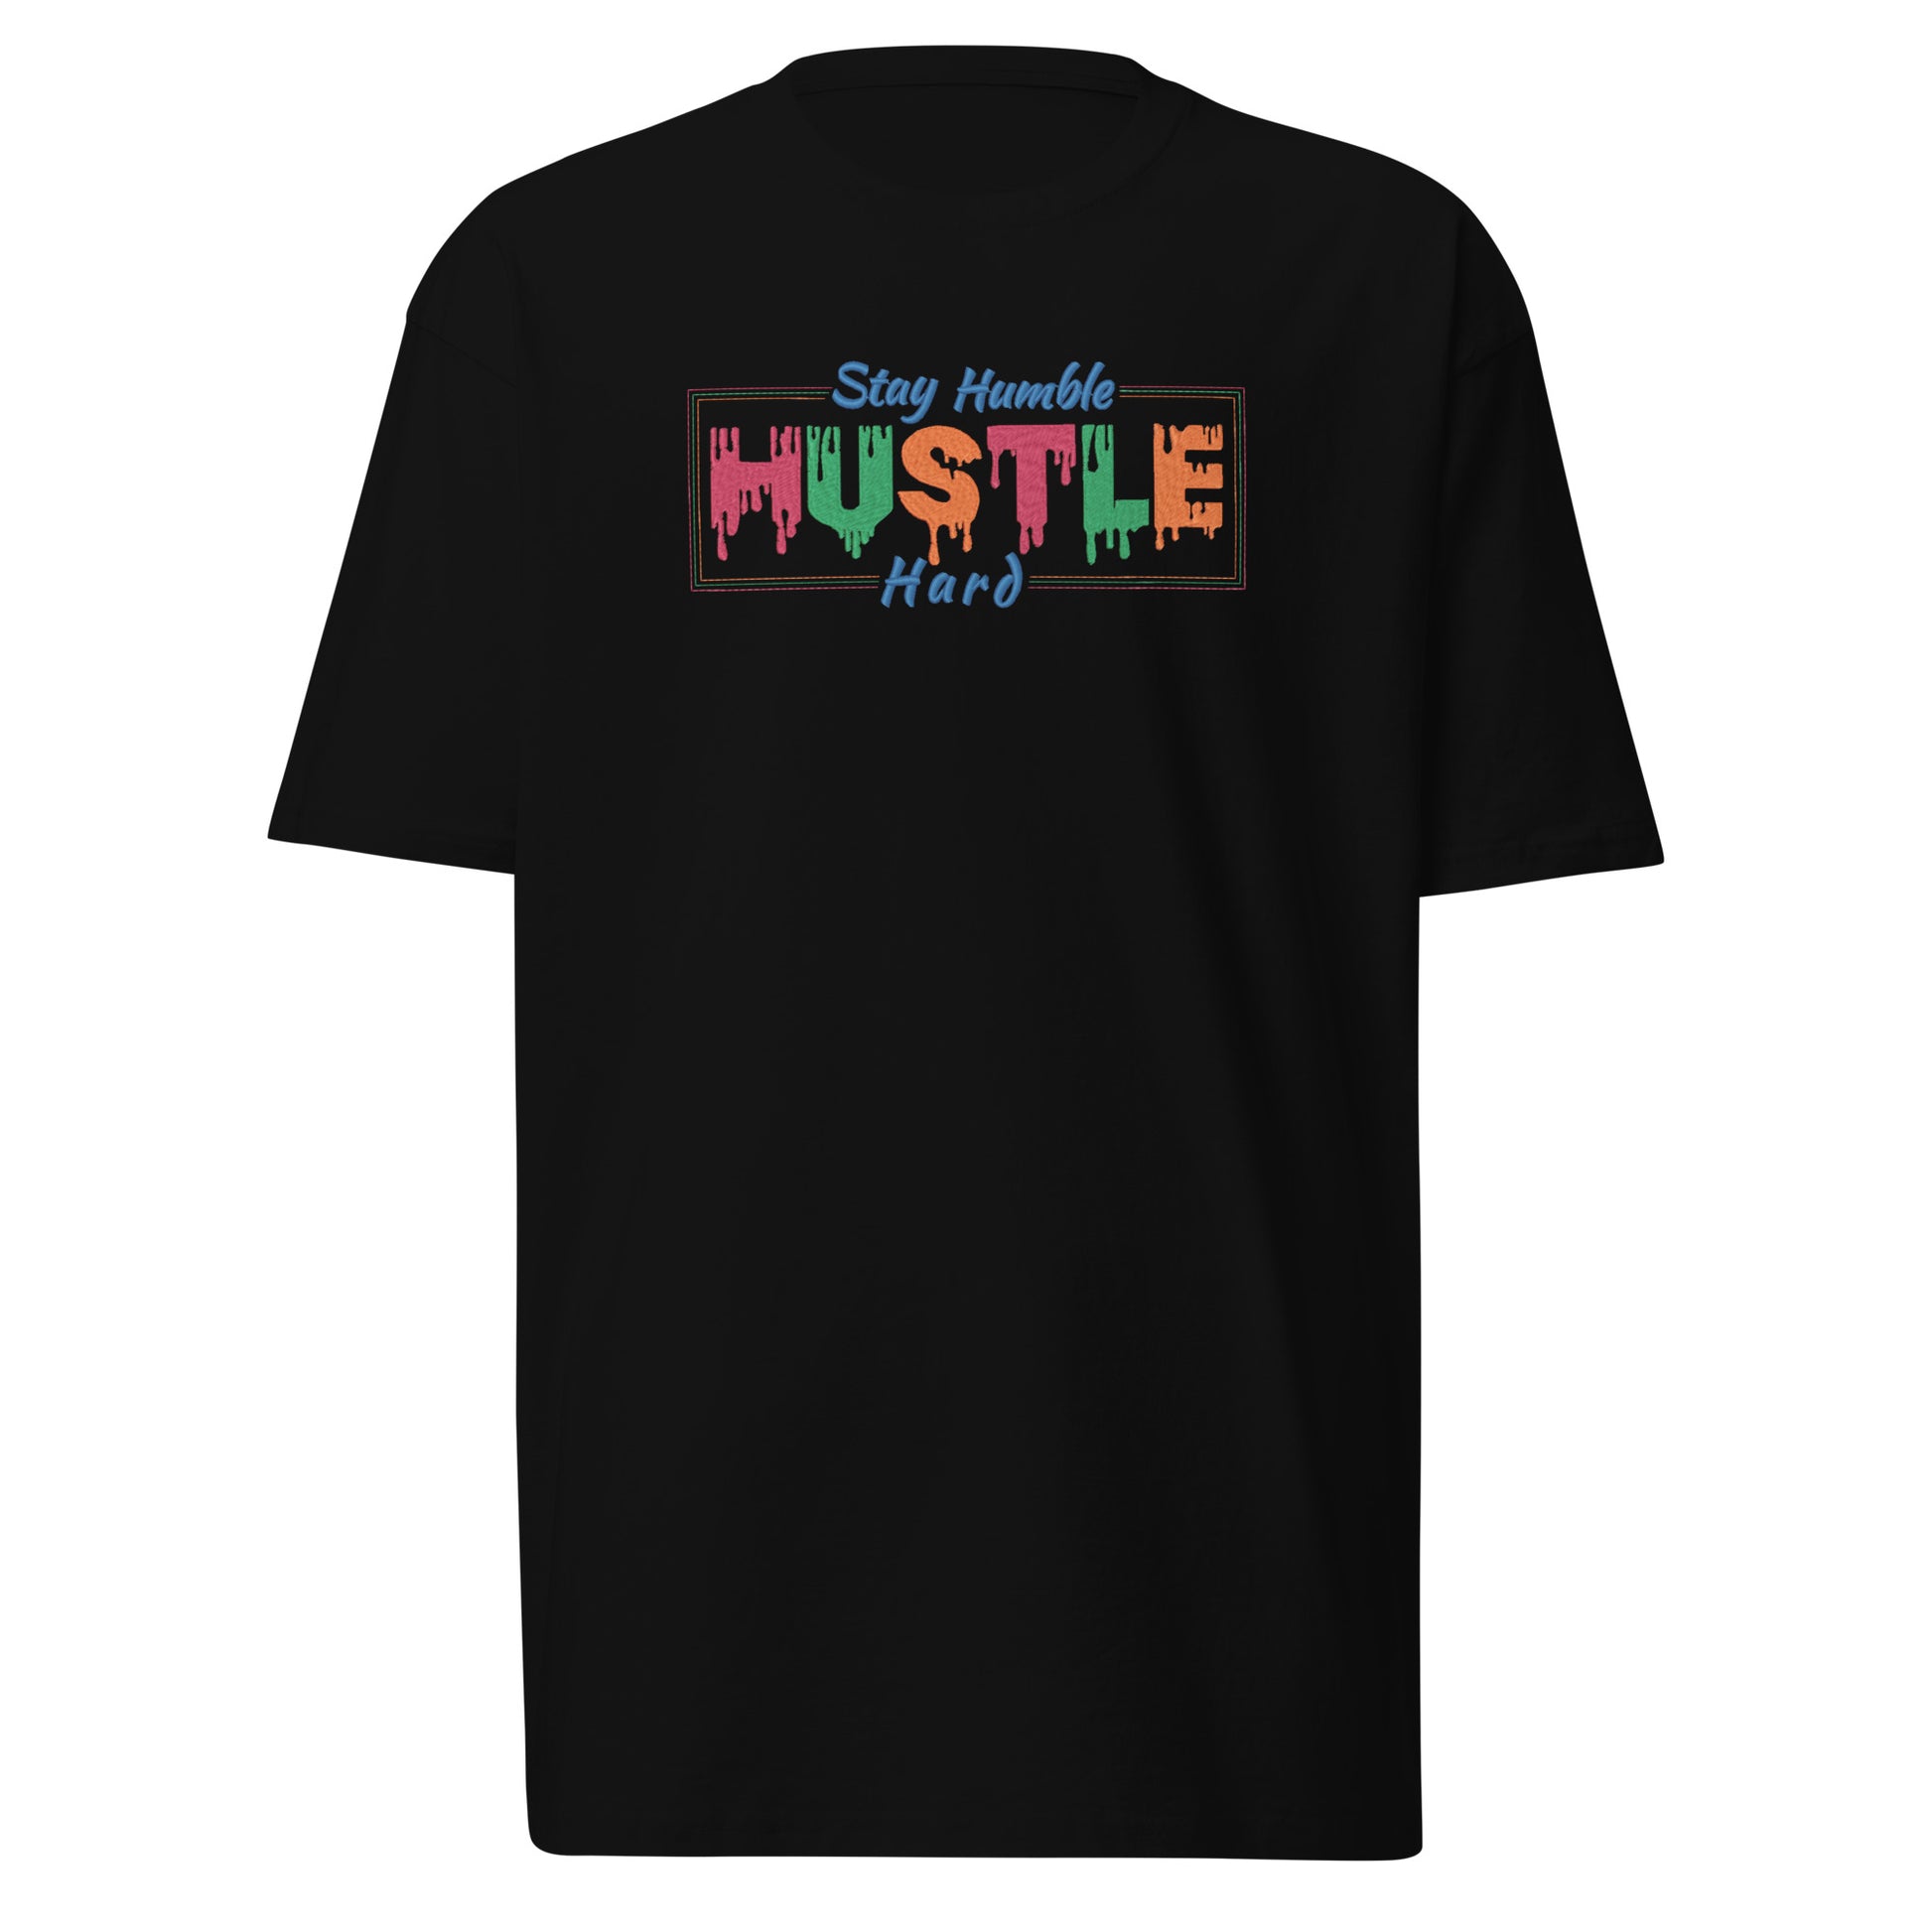 Stay Hamble Hustle Hard GILDAN T-Shirt - Magandato